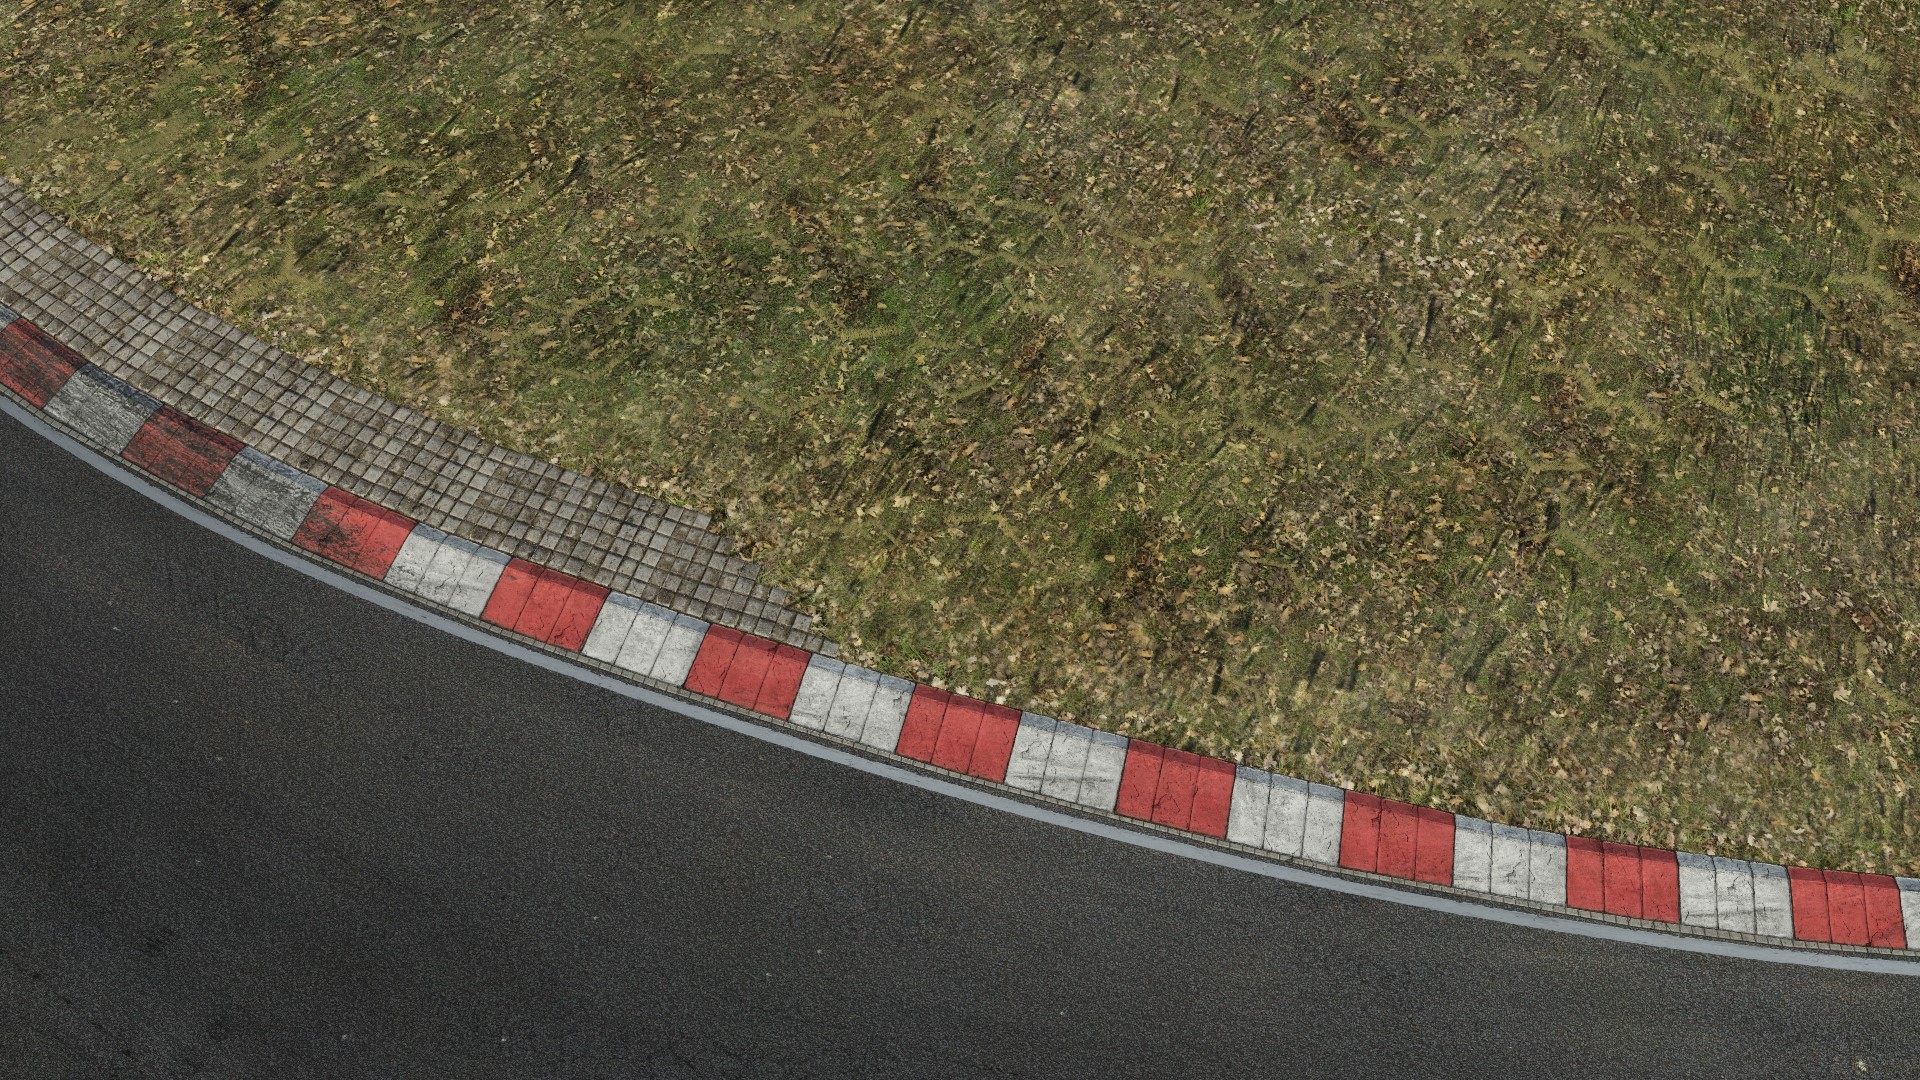 Screenshot_ks_bmw_m235i_racing_ks_nordschleife_10-1-118-4-37-47.jpg